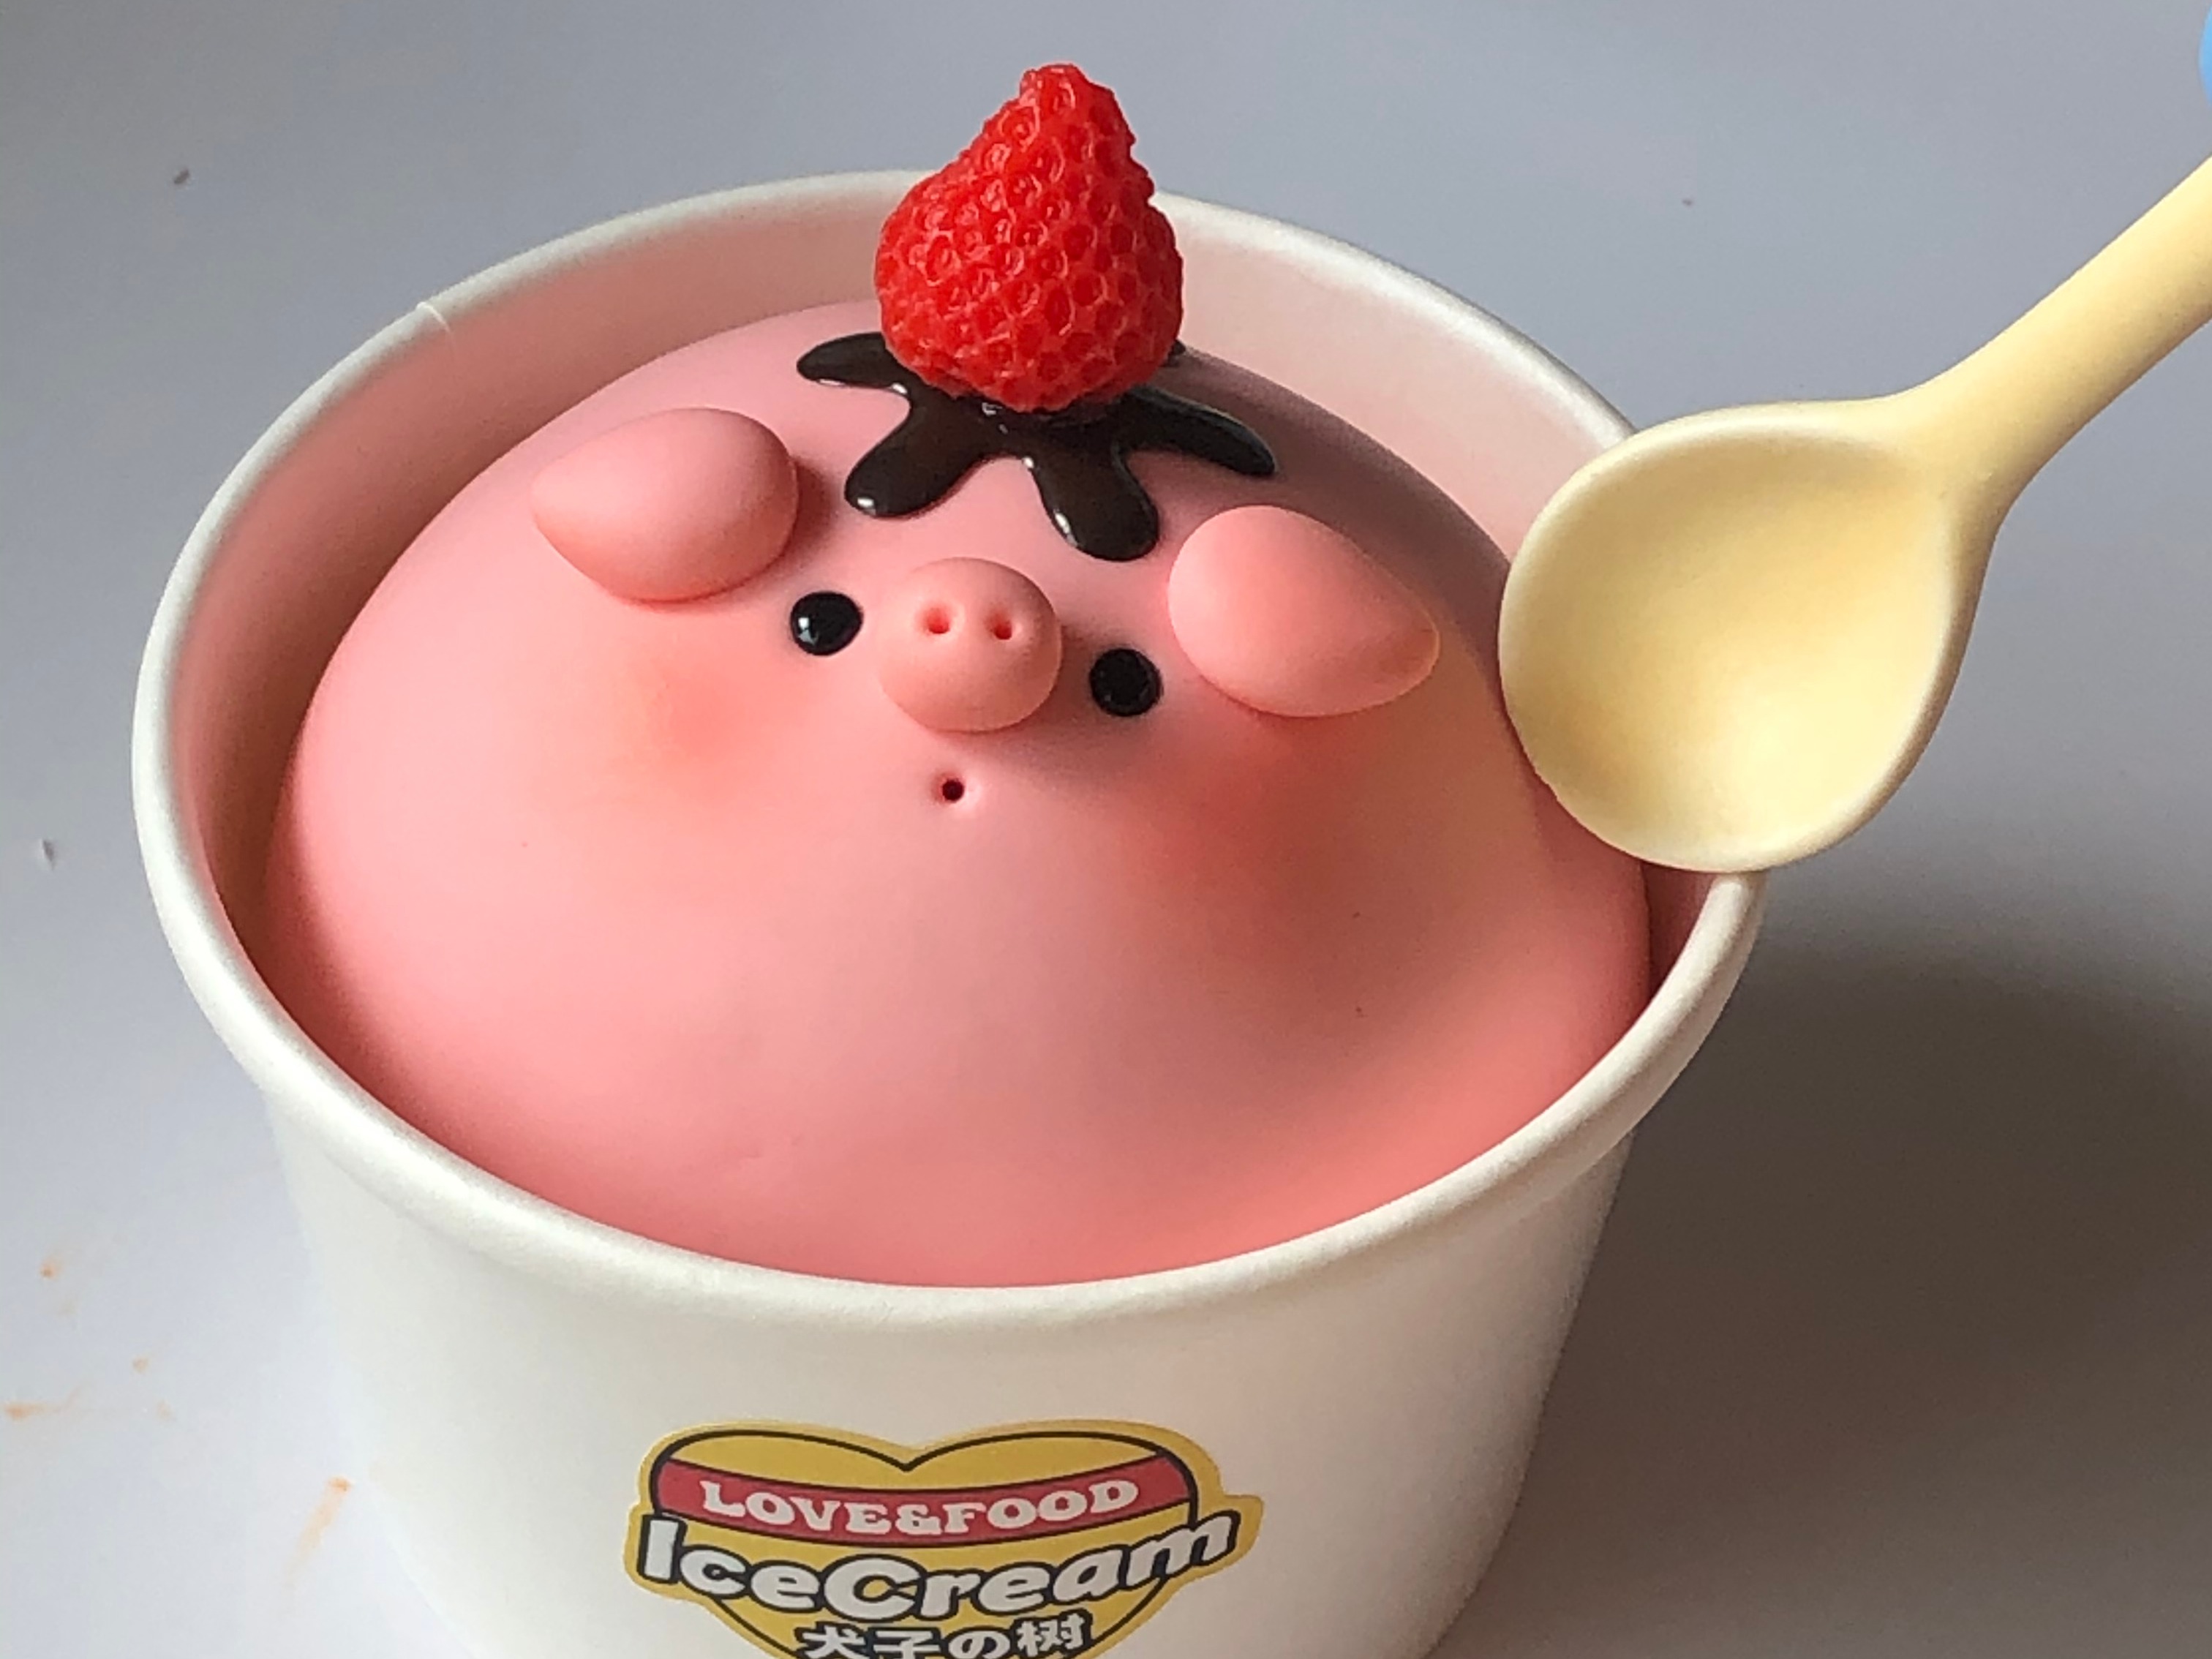 3D立体卡通猪可爱动物草莓饼干美食装饰模板免费下载_png格式_3072像素_编号44363590-千图网